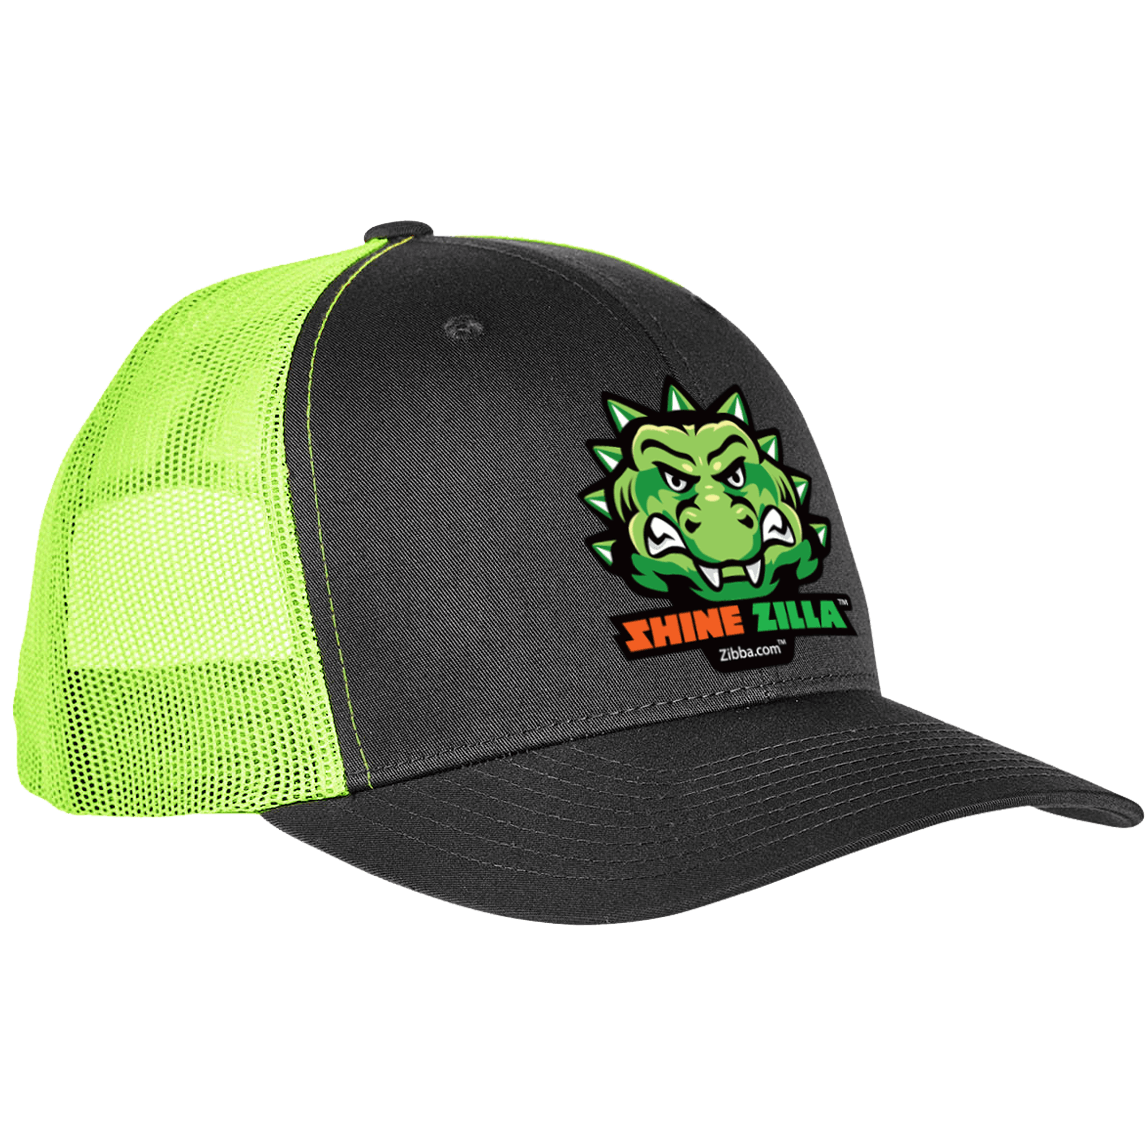 Shine Zilla - Green Mesh Trucker Hat